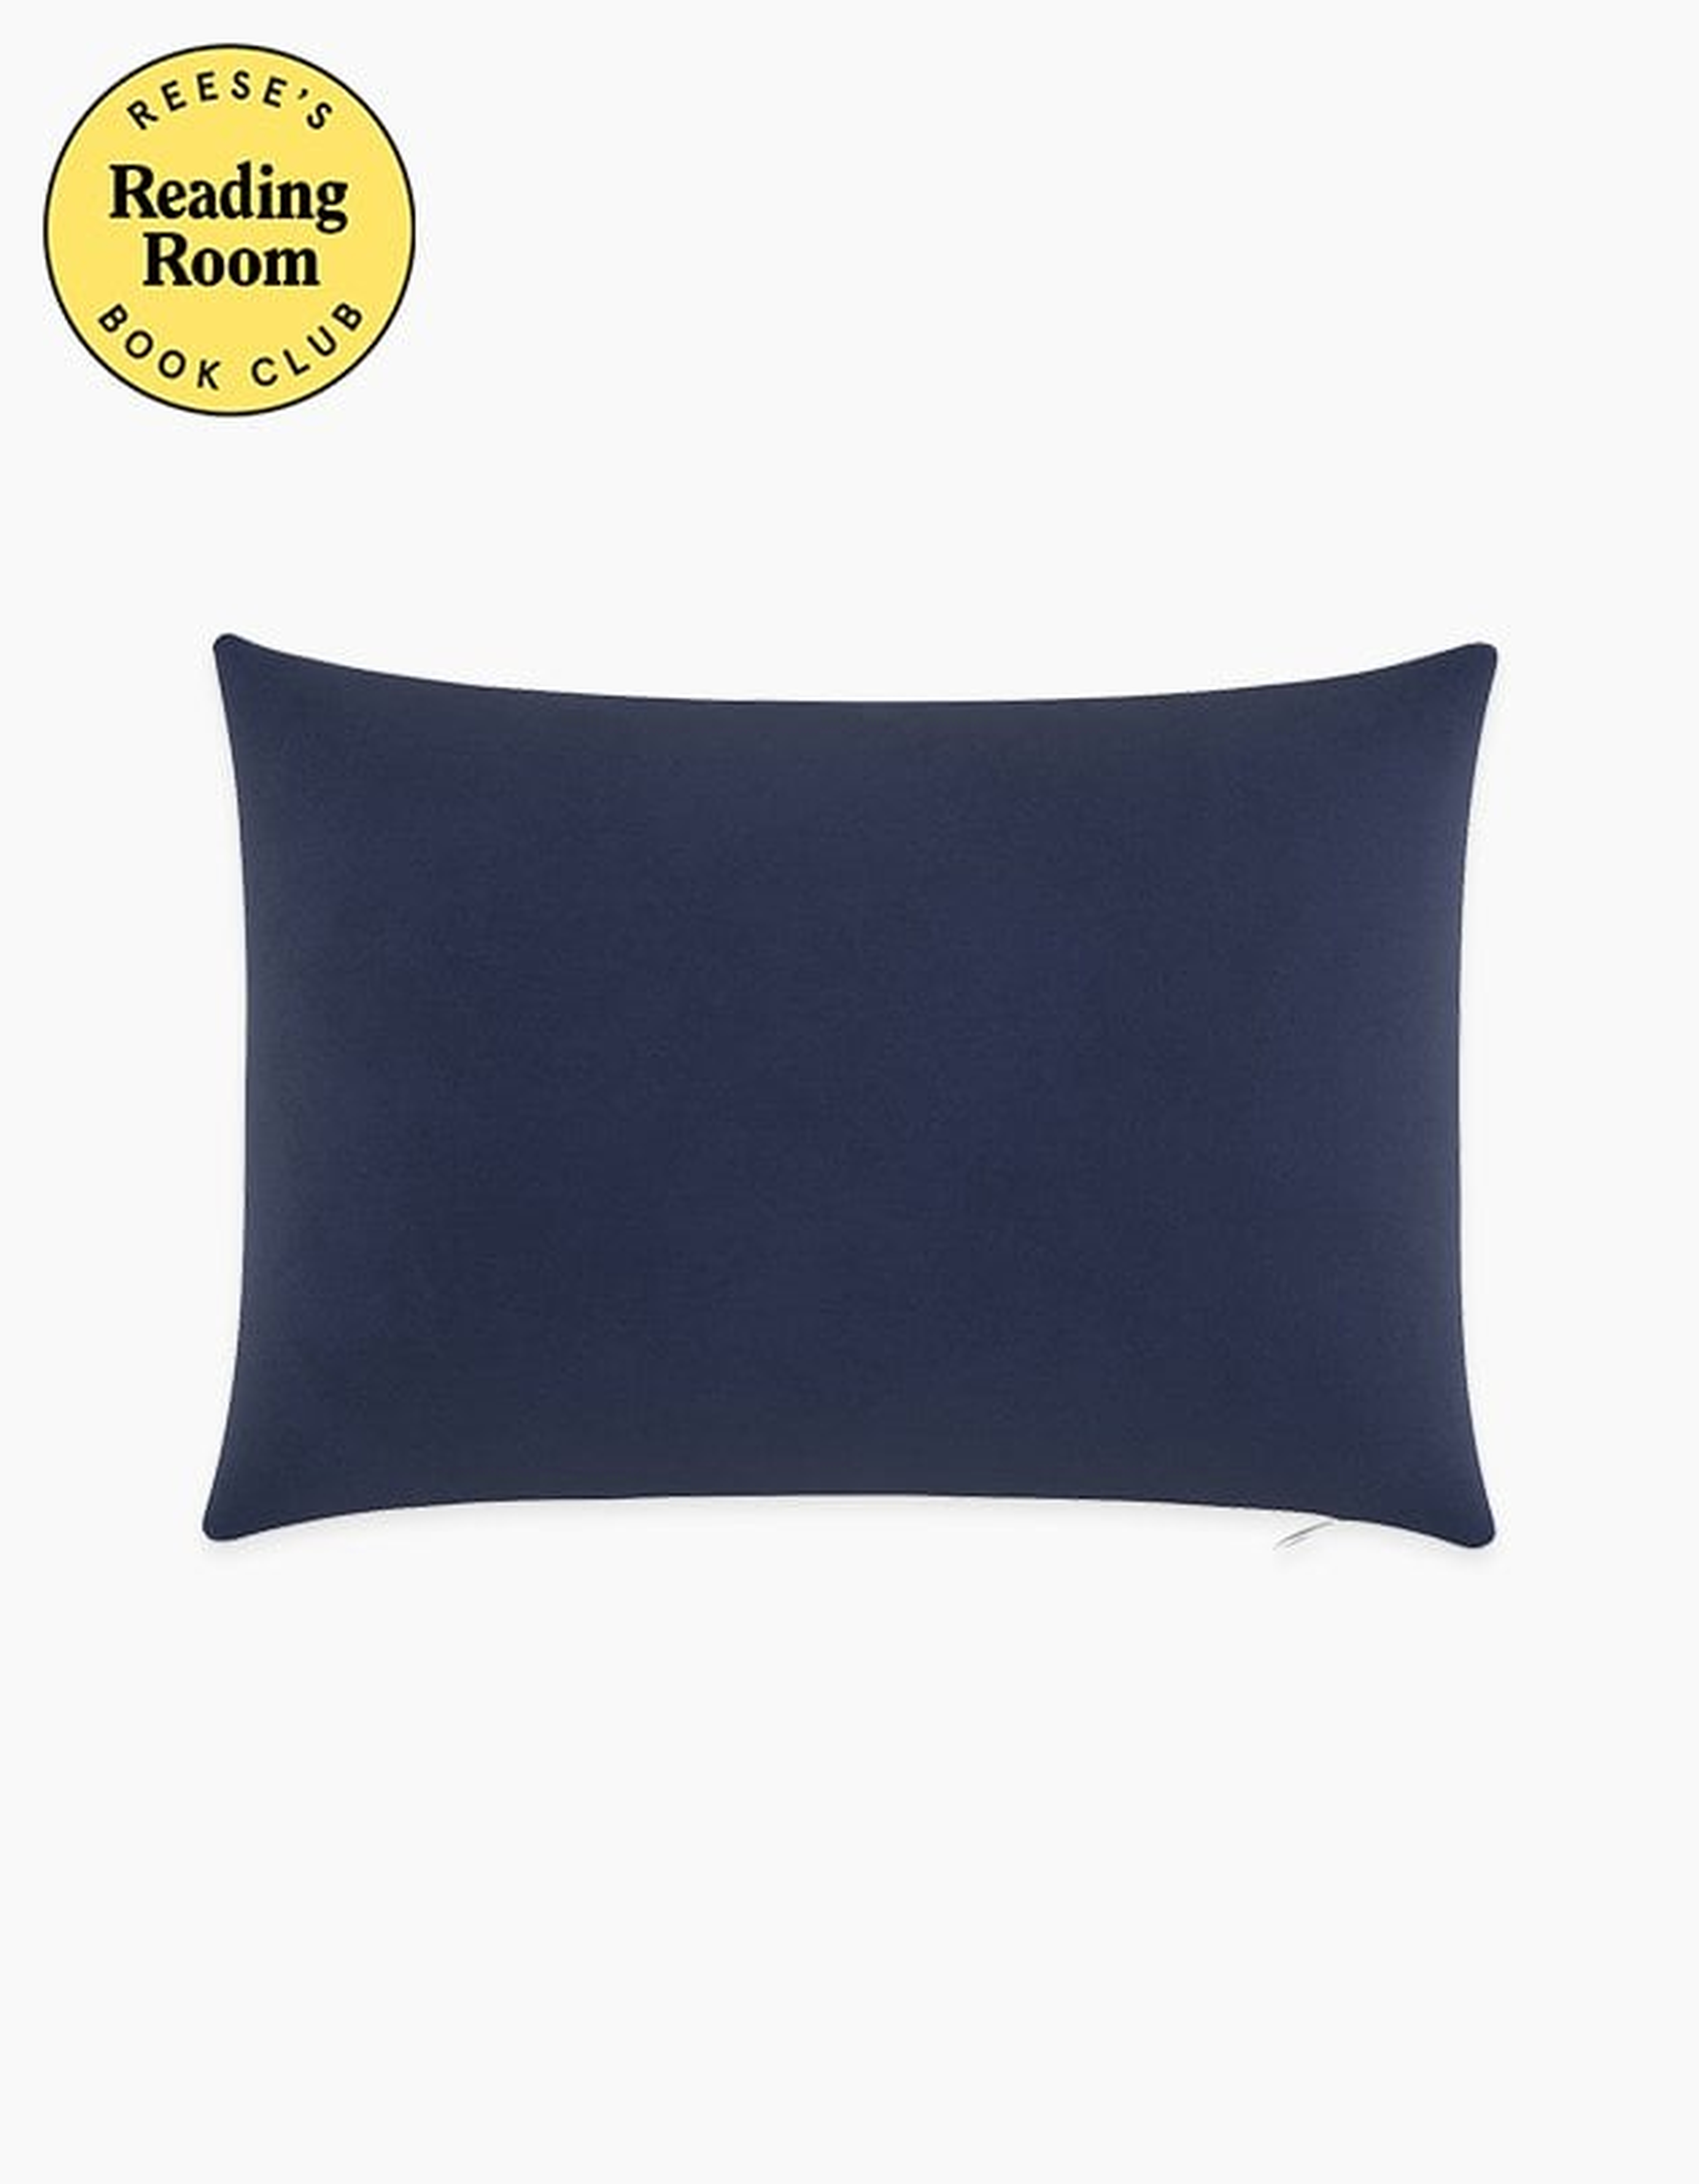 Navy Velvet Throw Pillow - 14" x 20" - Reese's Book Club x Havenly